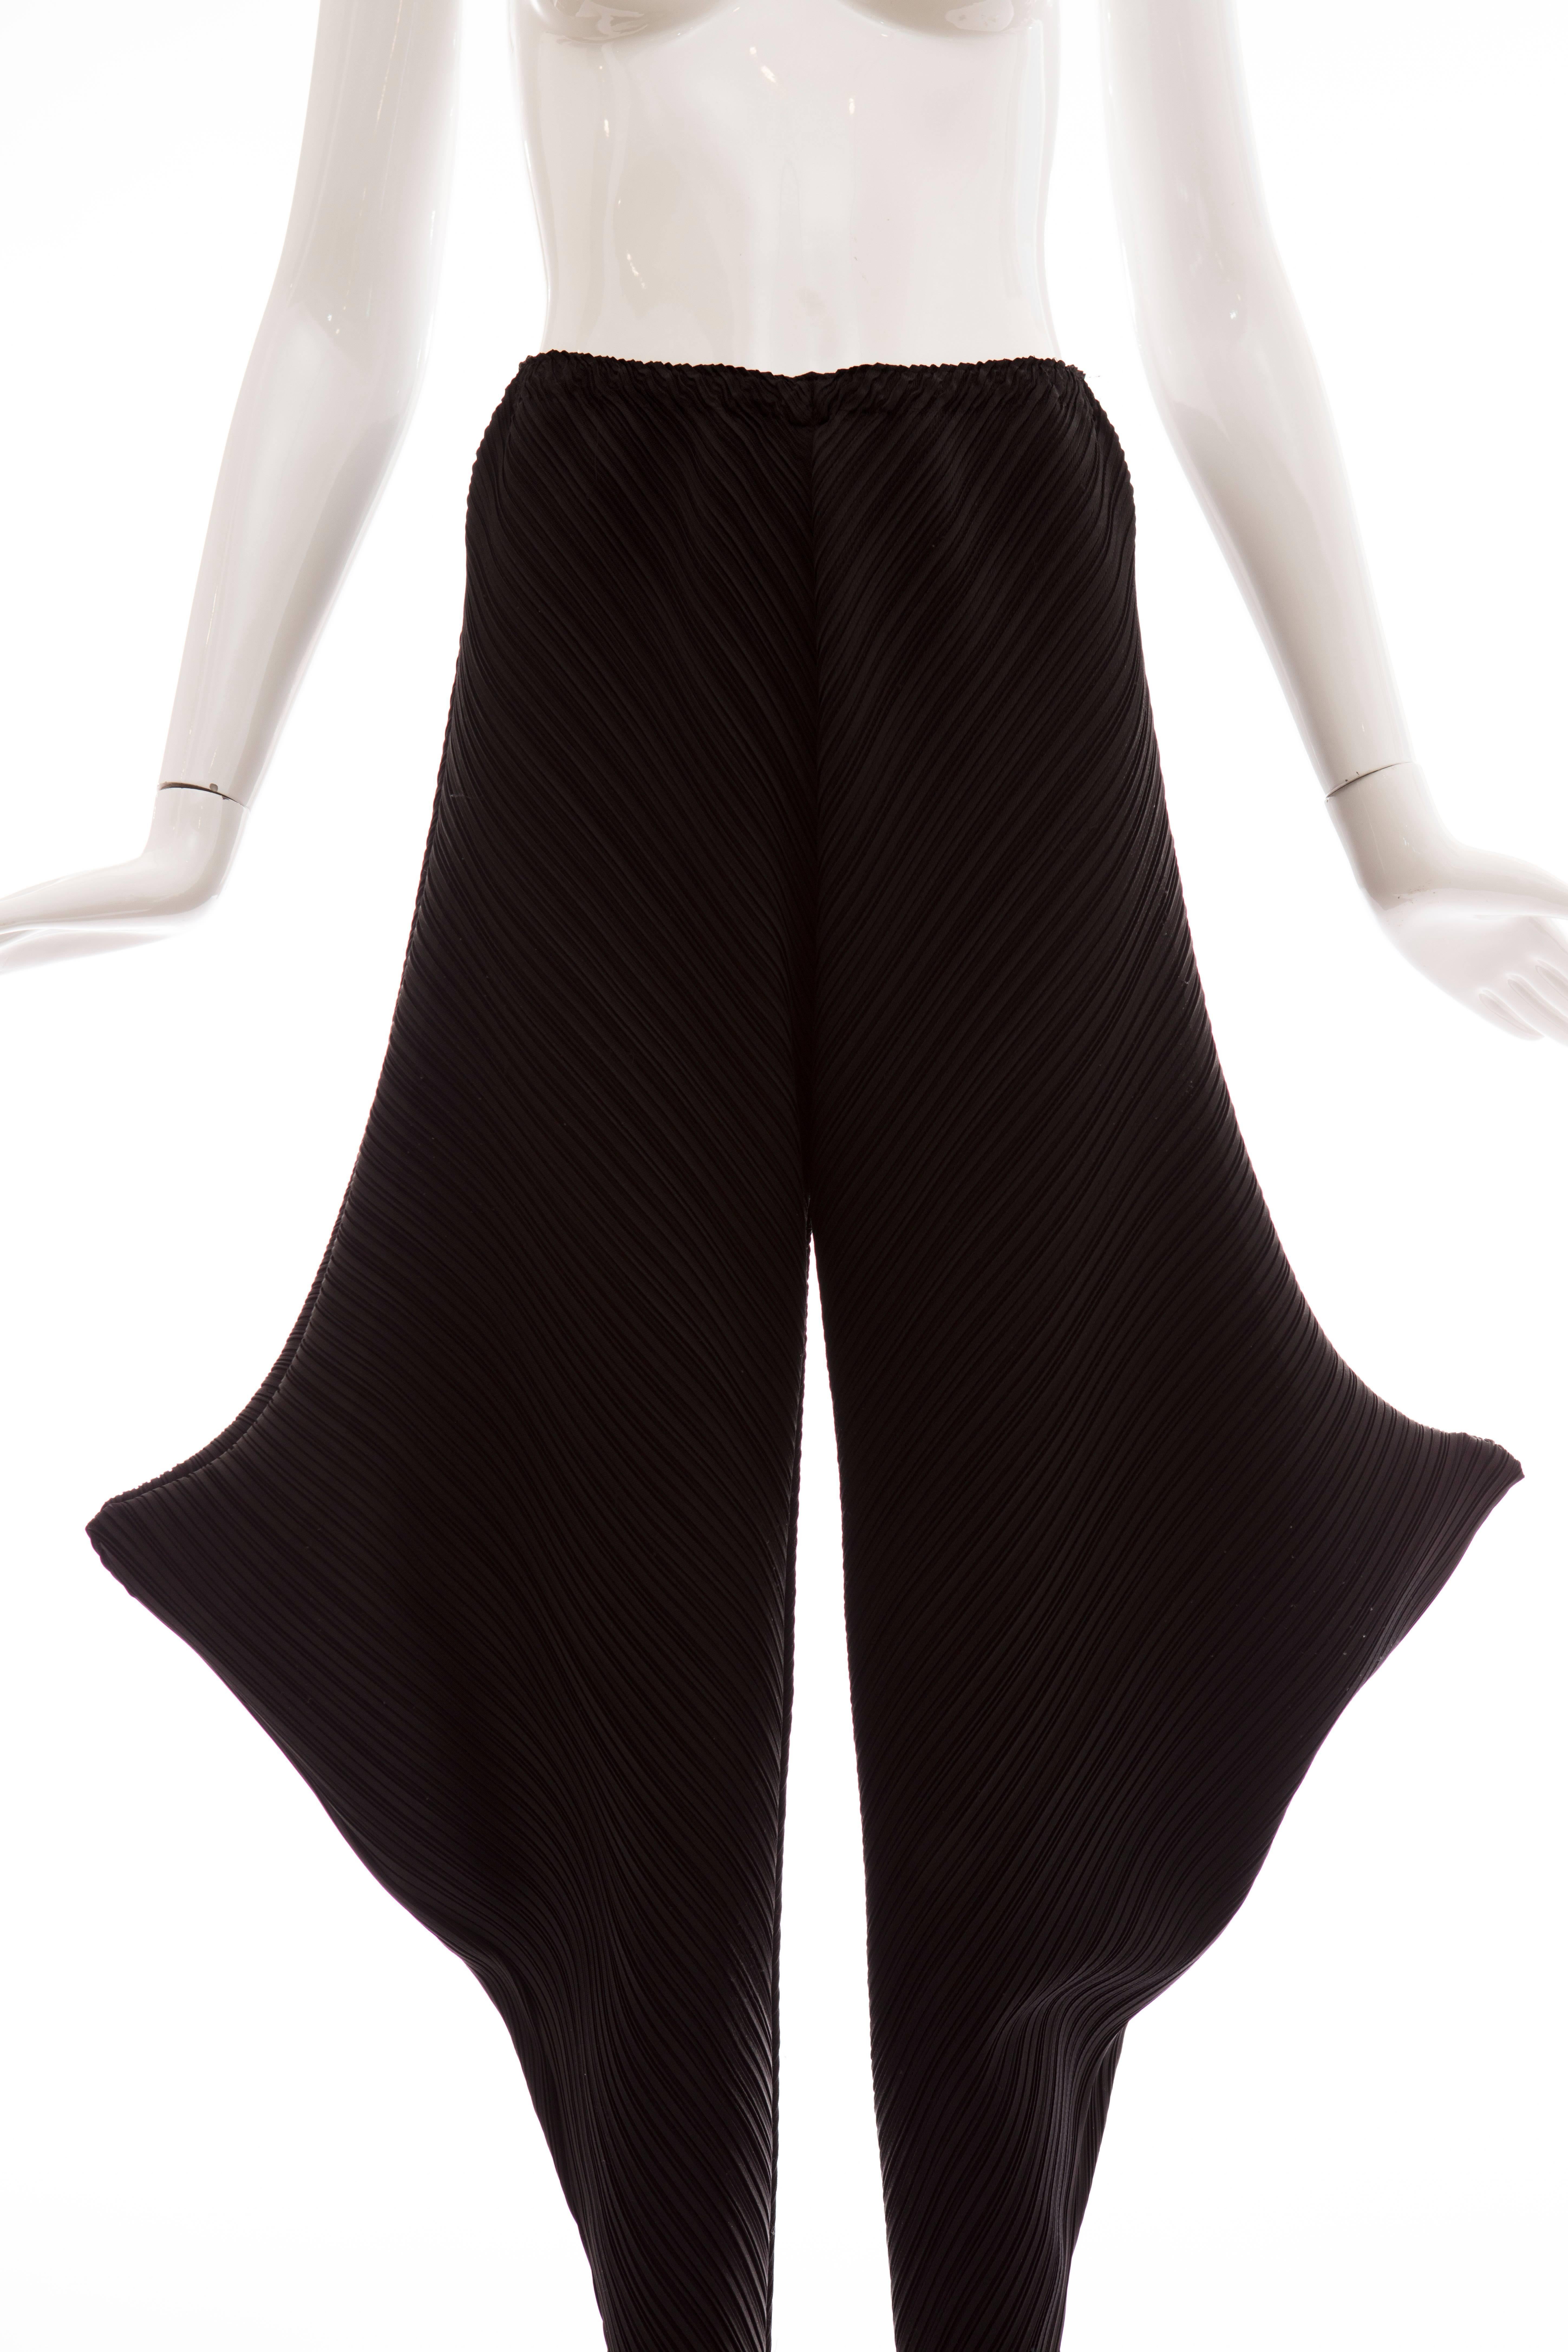 Issey Miyake Black Plissé Pants Side Structured Details, Circa: 1990s 1